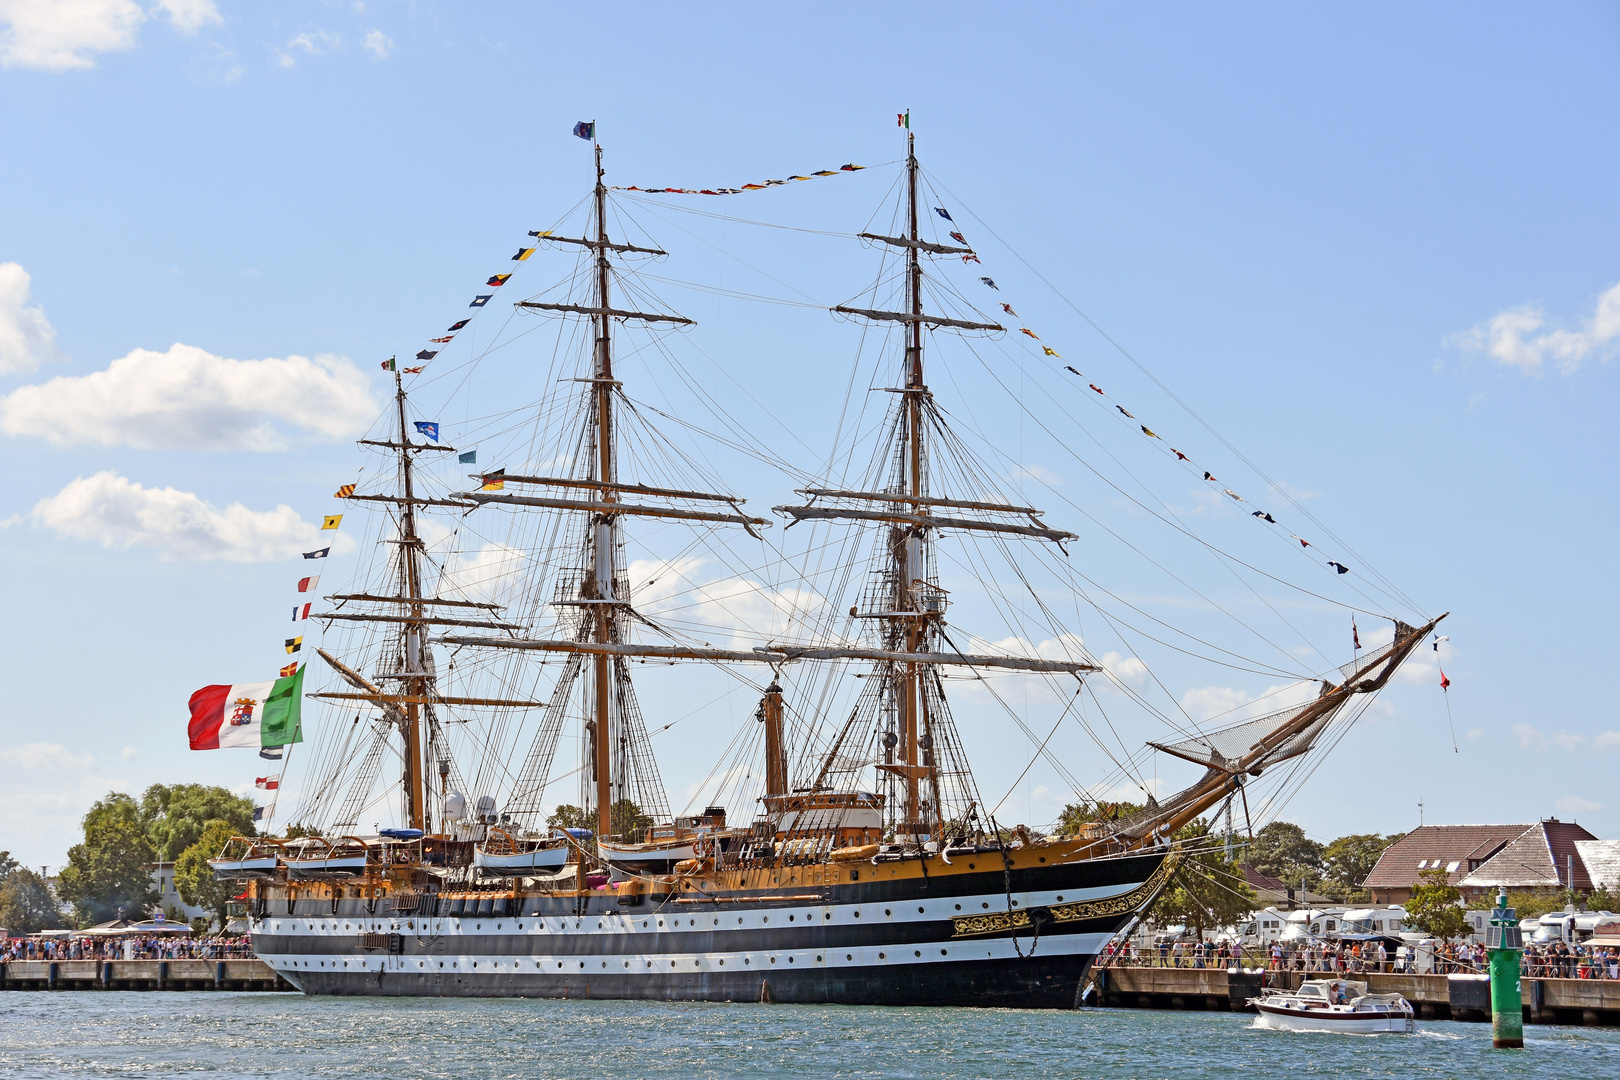 Die "Amerigo Vespucci" in Warnemünde zur Hanse Sail